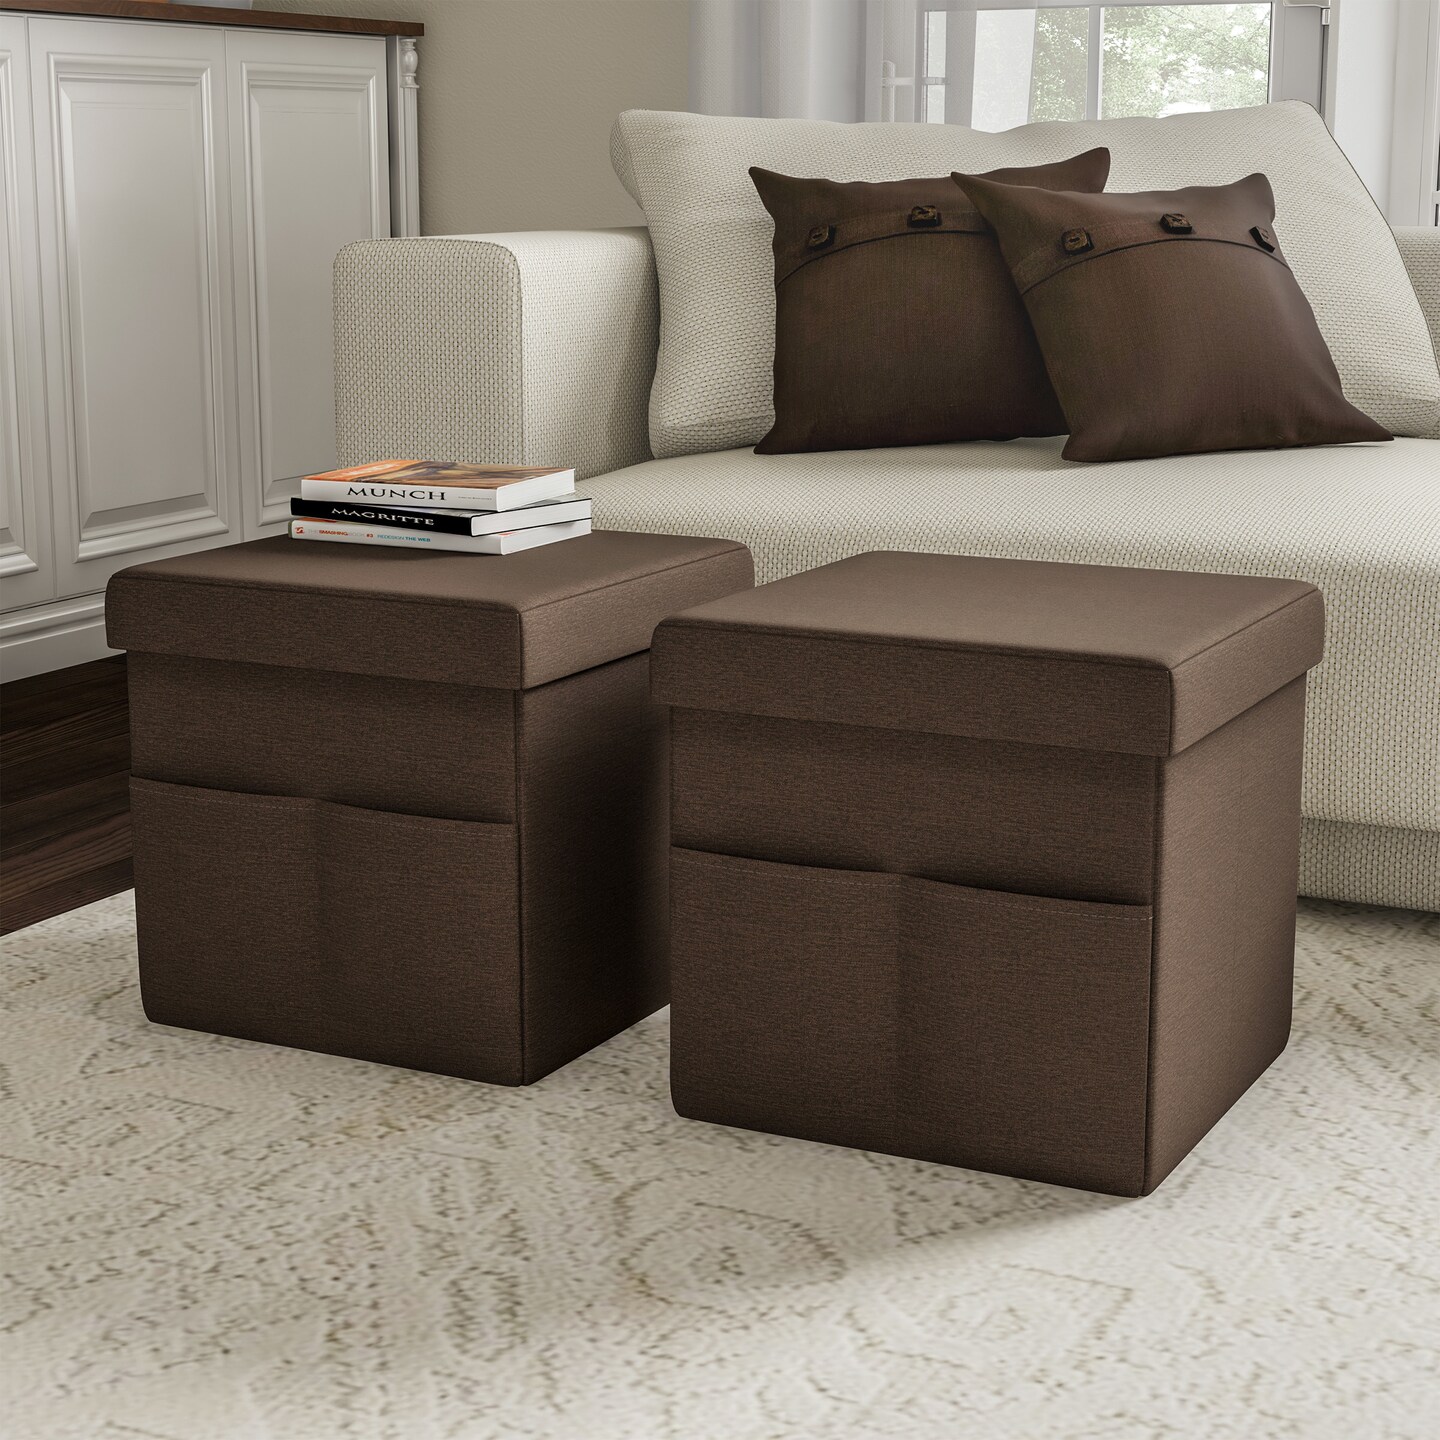 Lavish Home Foldable Storage Cube Ottoman with Pockets  Multipurpose Footrest Seat Organizer for Bedroom Living Room Dorm